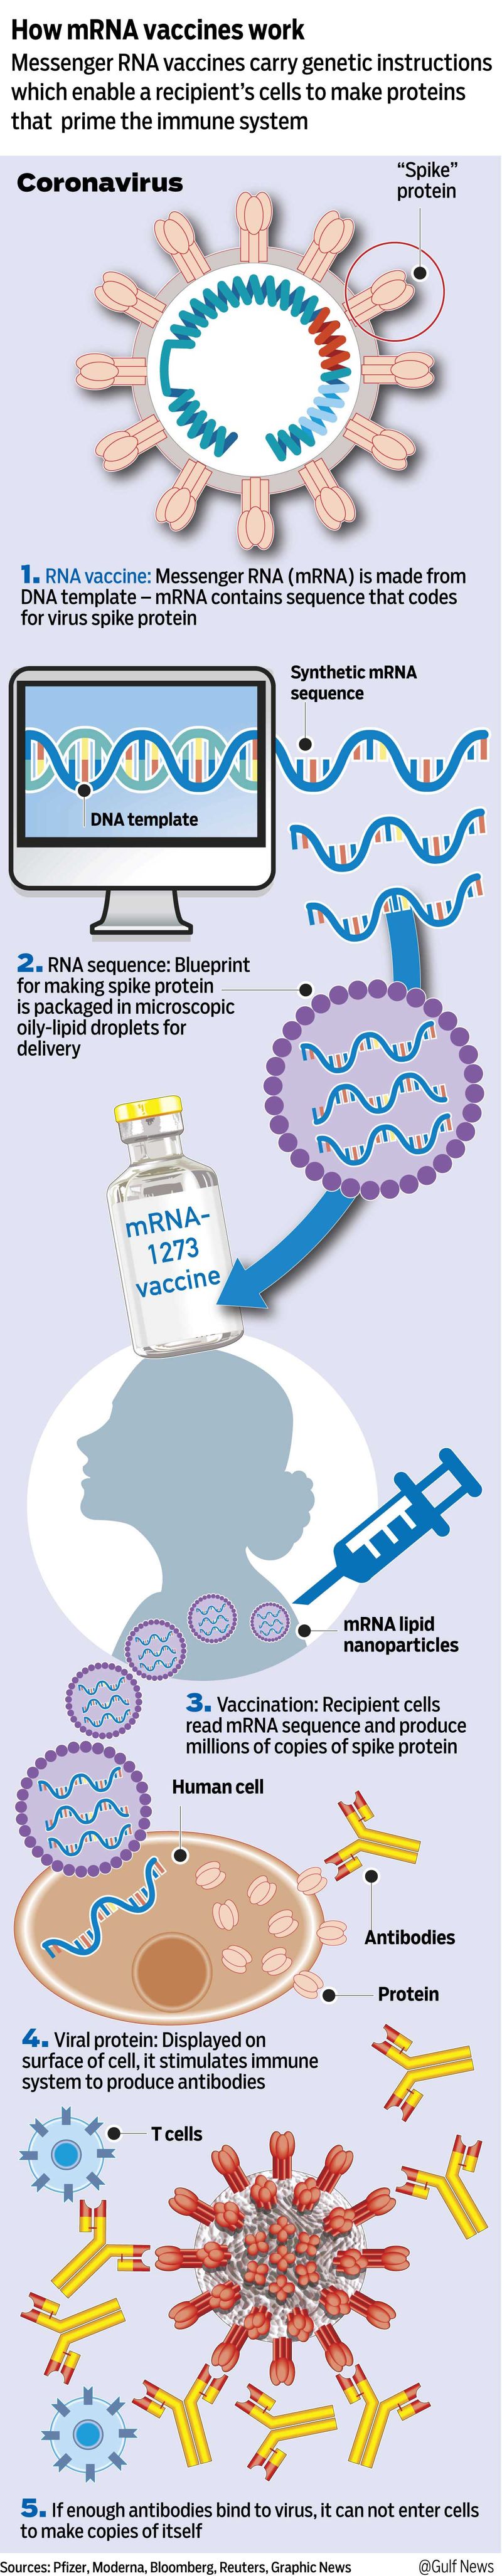 20201117 mRNA vaccien 